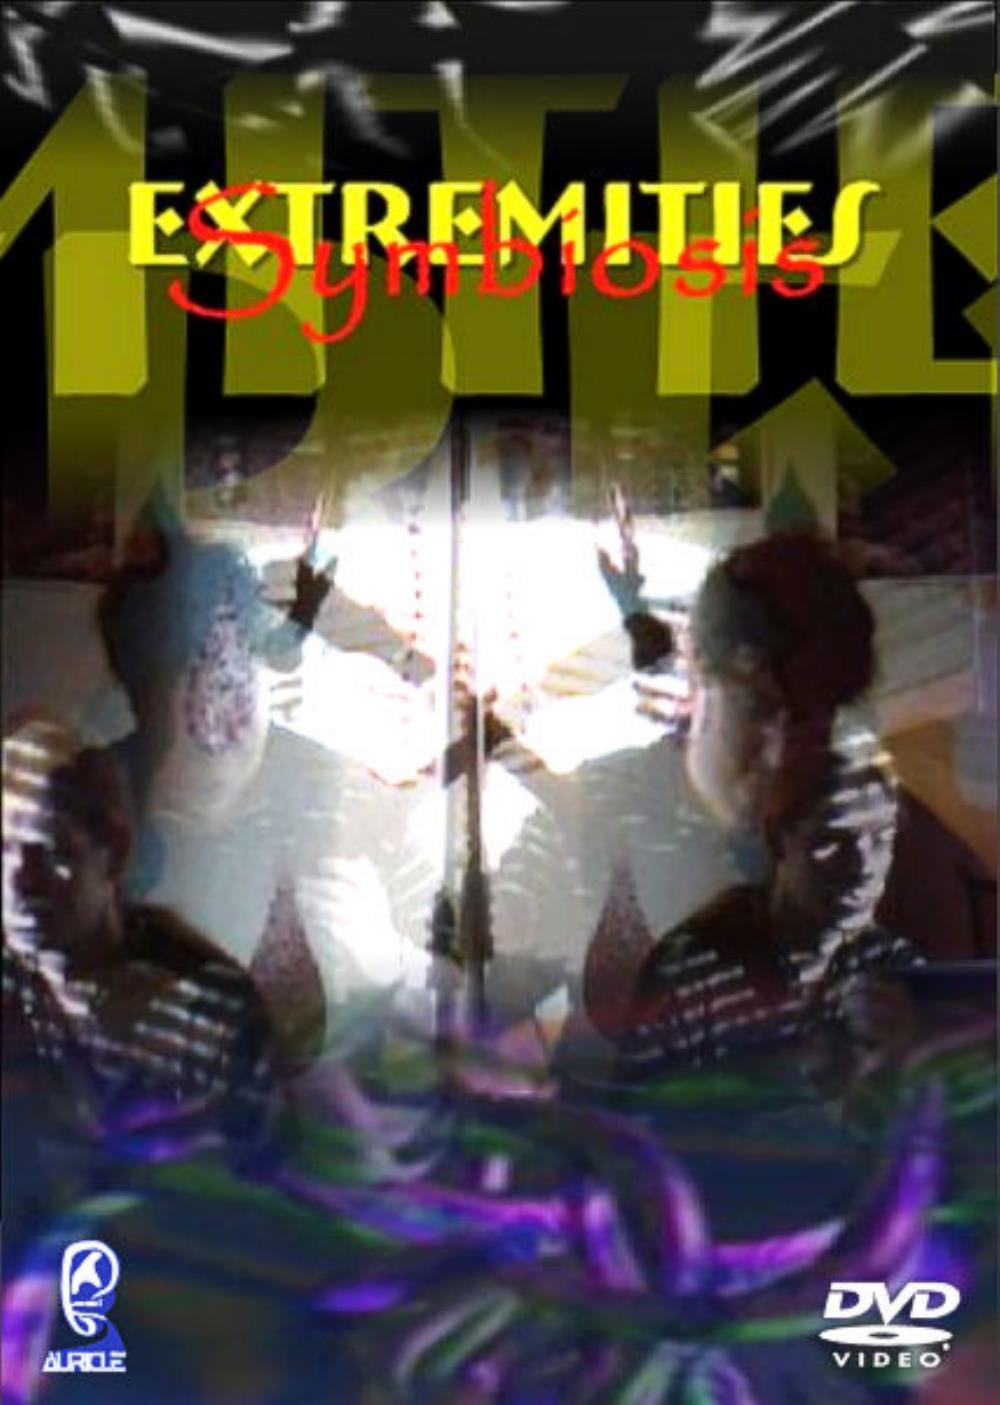 Extremities - Symbiosis CD (album) cover